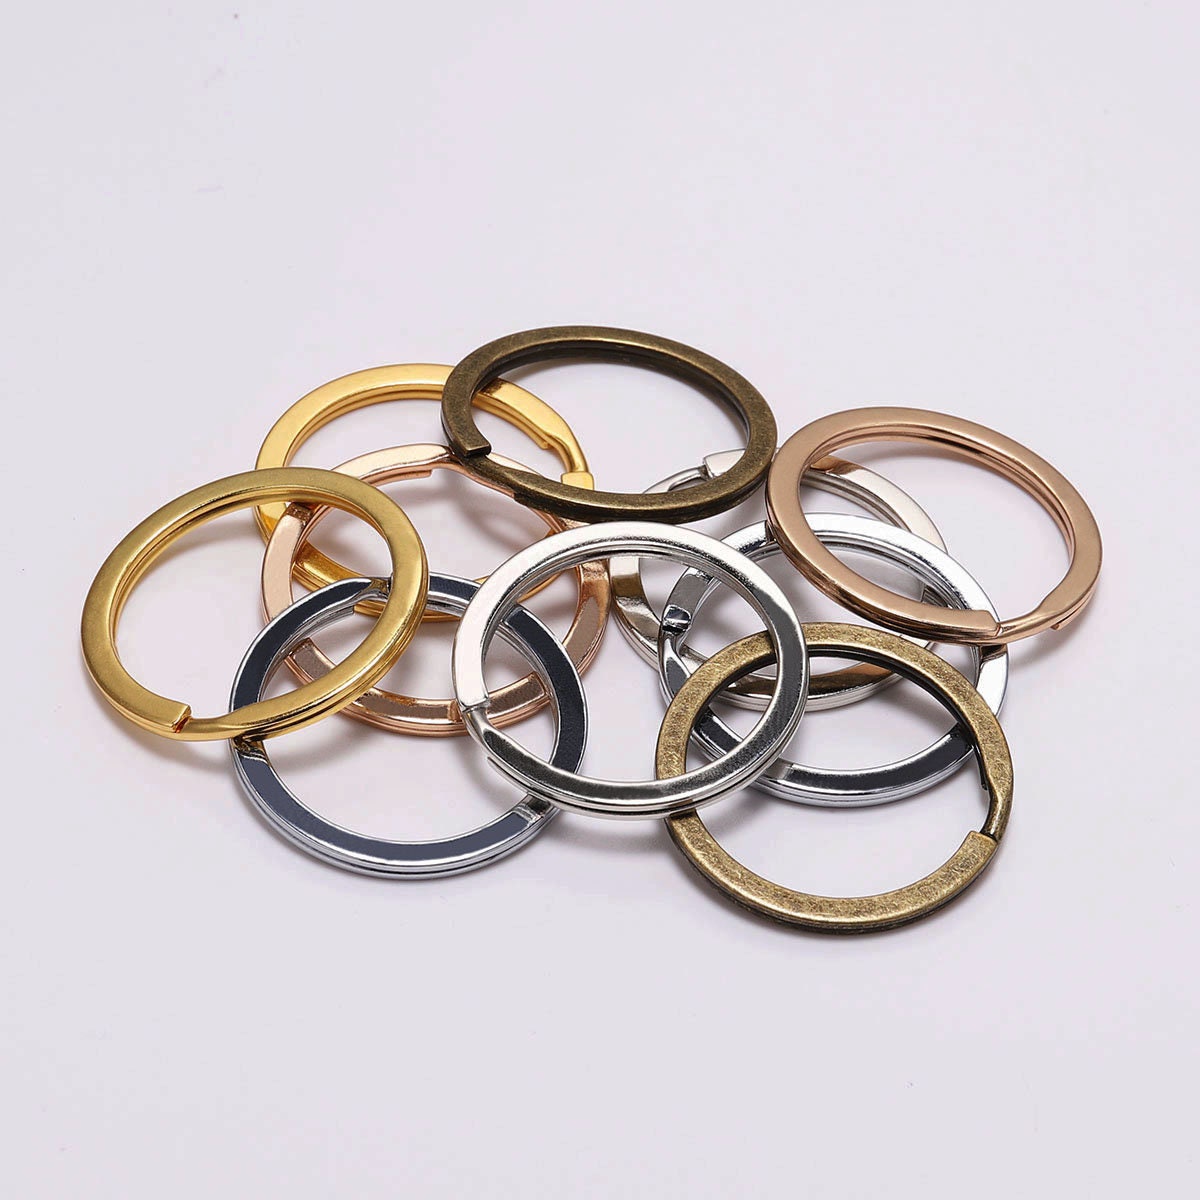 20pcs Split Key Rings,gold Plated Key Rings,key Ring Findings